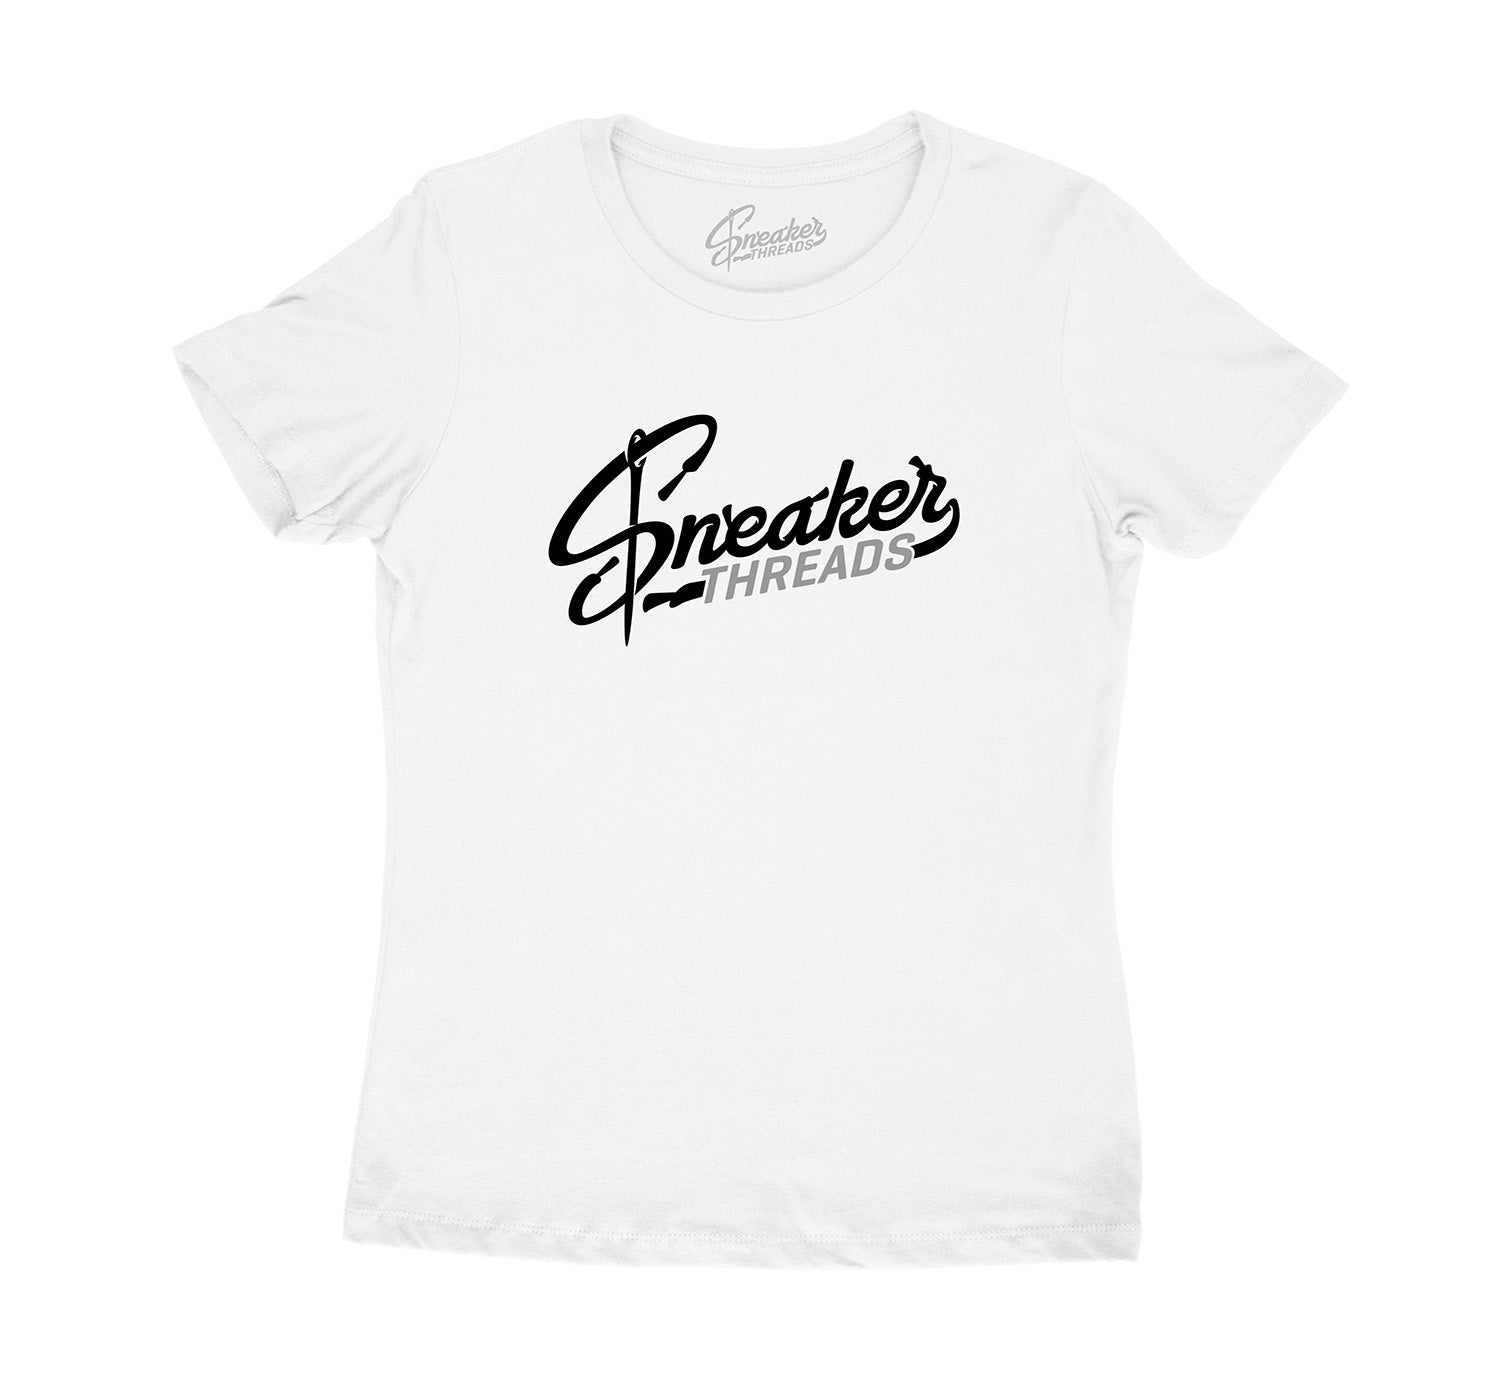 Sneakerthreads original shirt to match Yeezy White Cloud 350